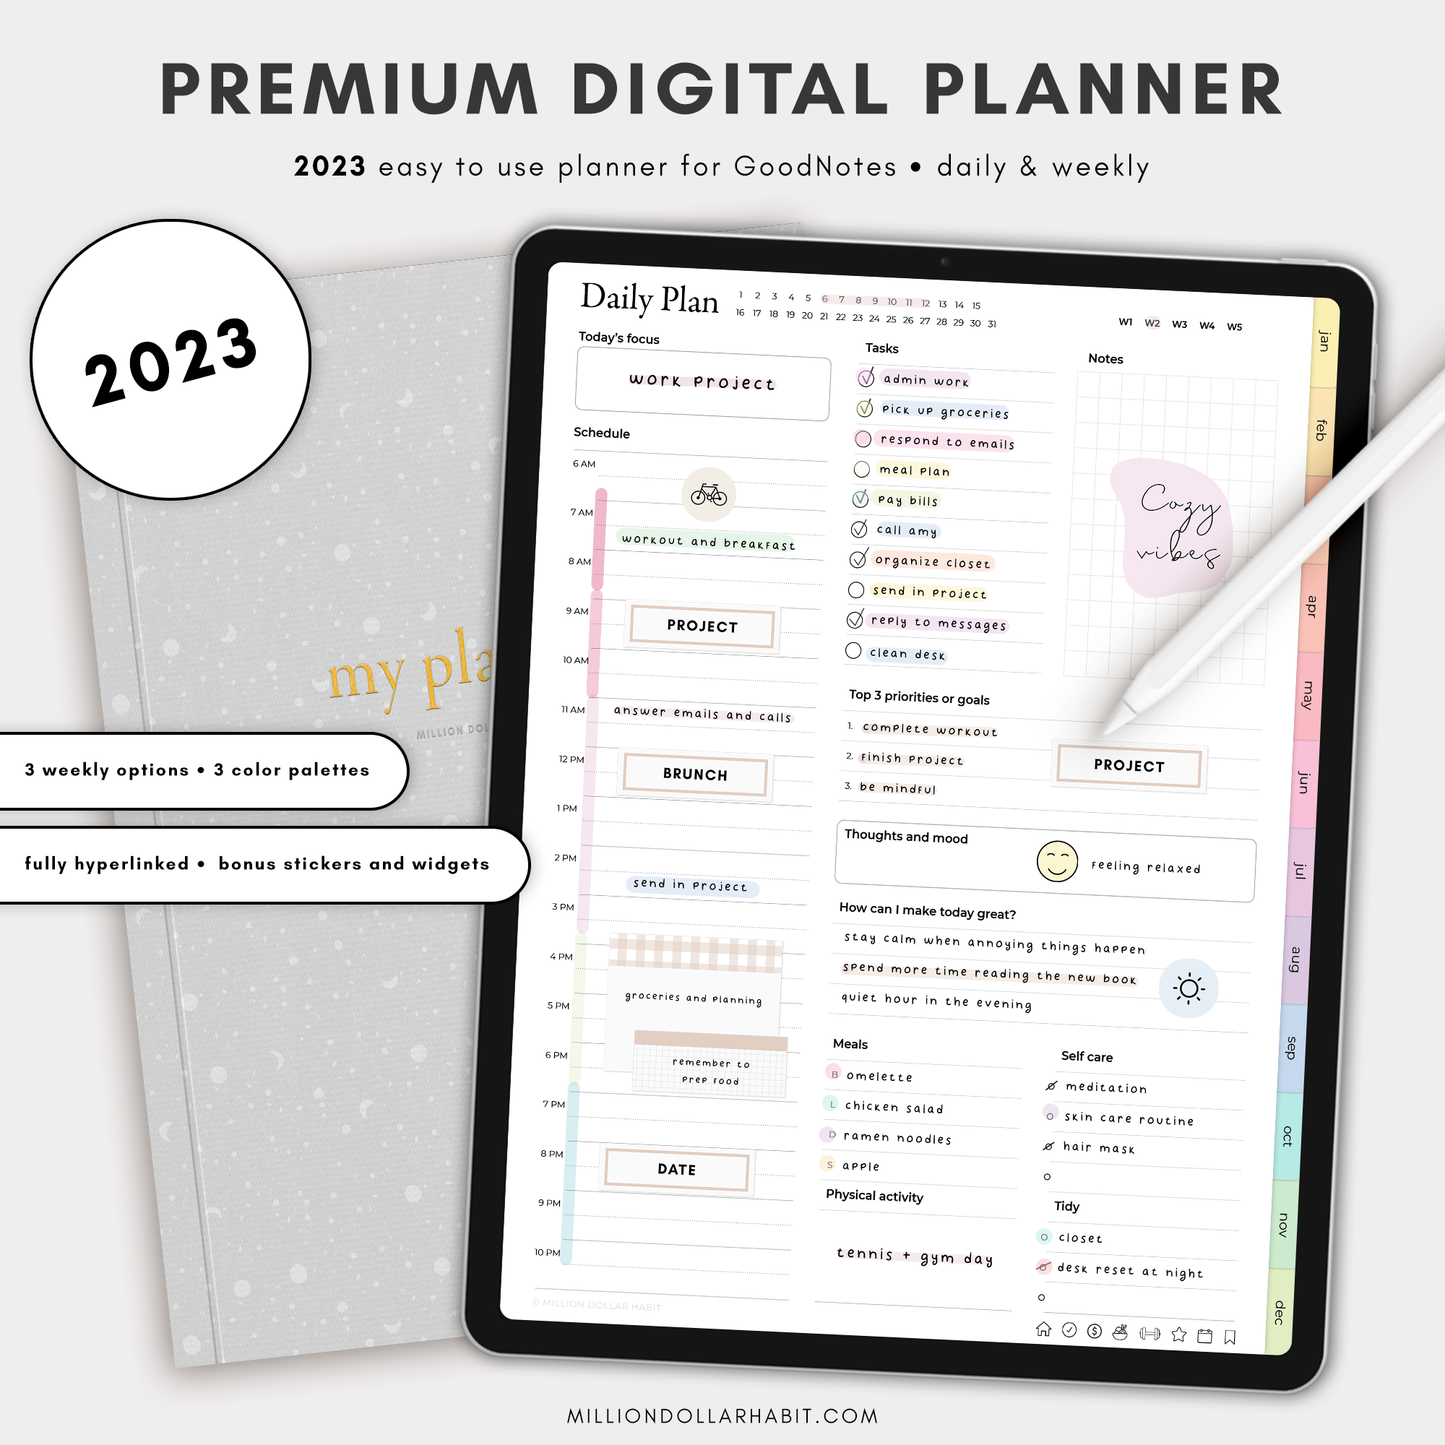 Premium Planner - Million Dollar Habit - 2023 Digital Planner